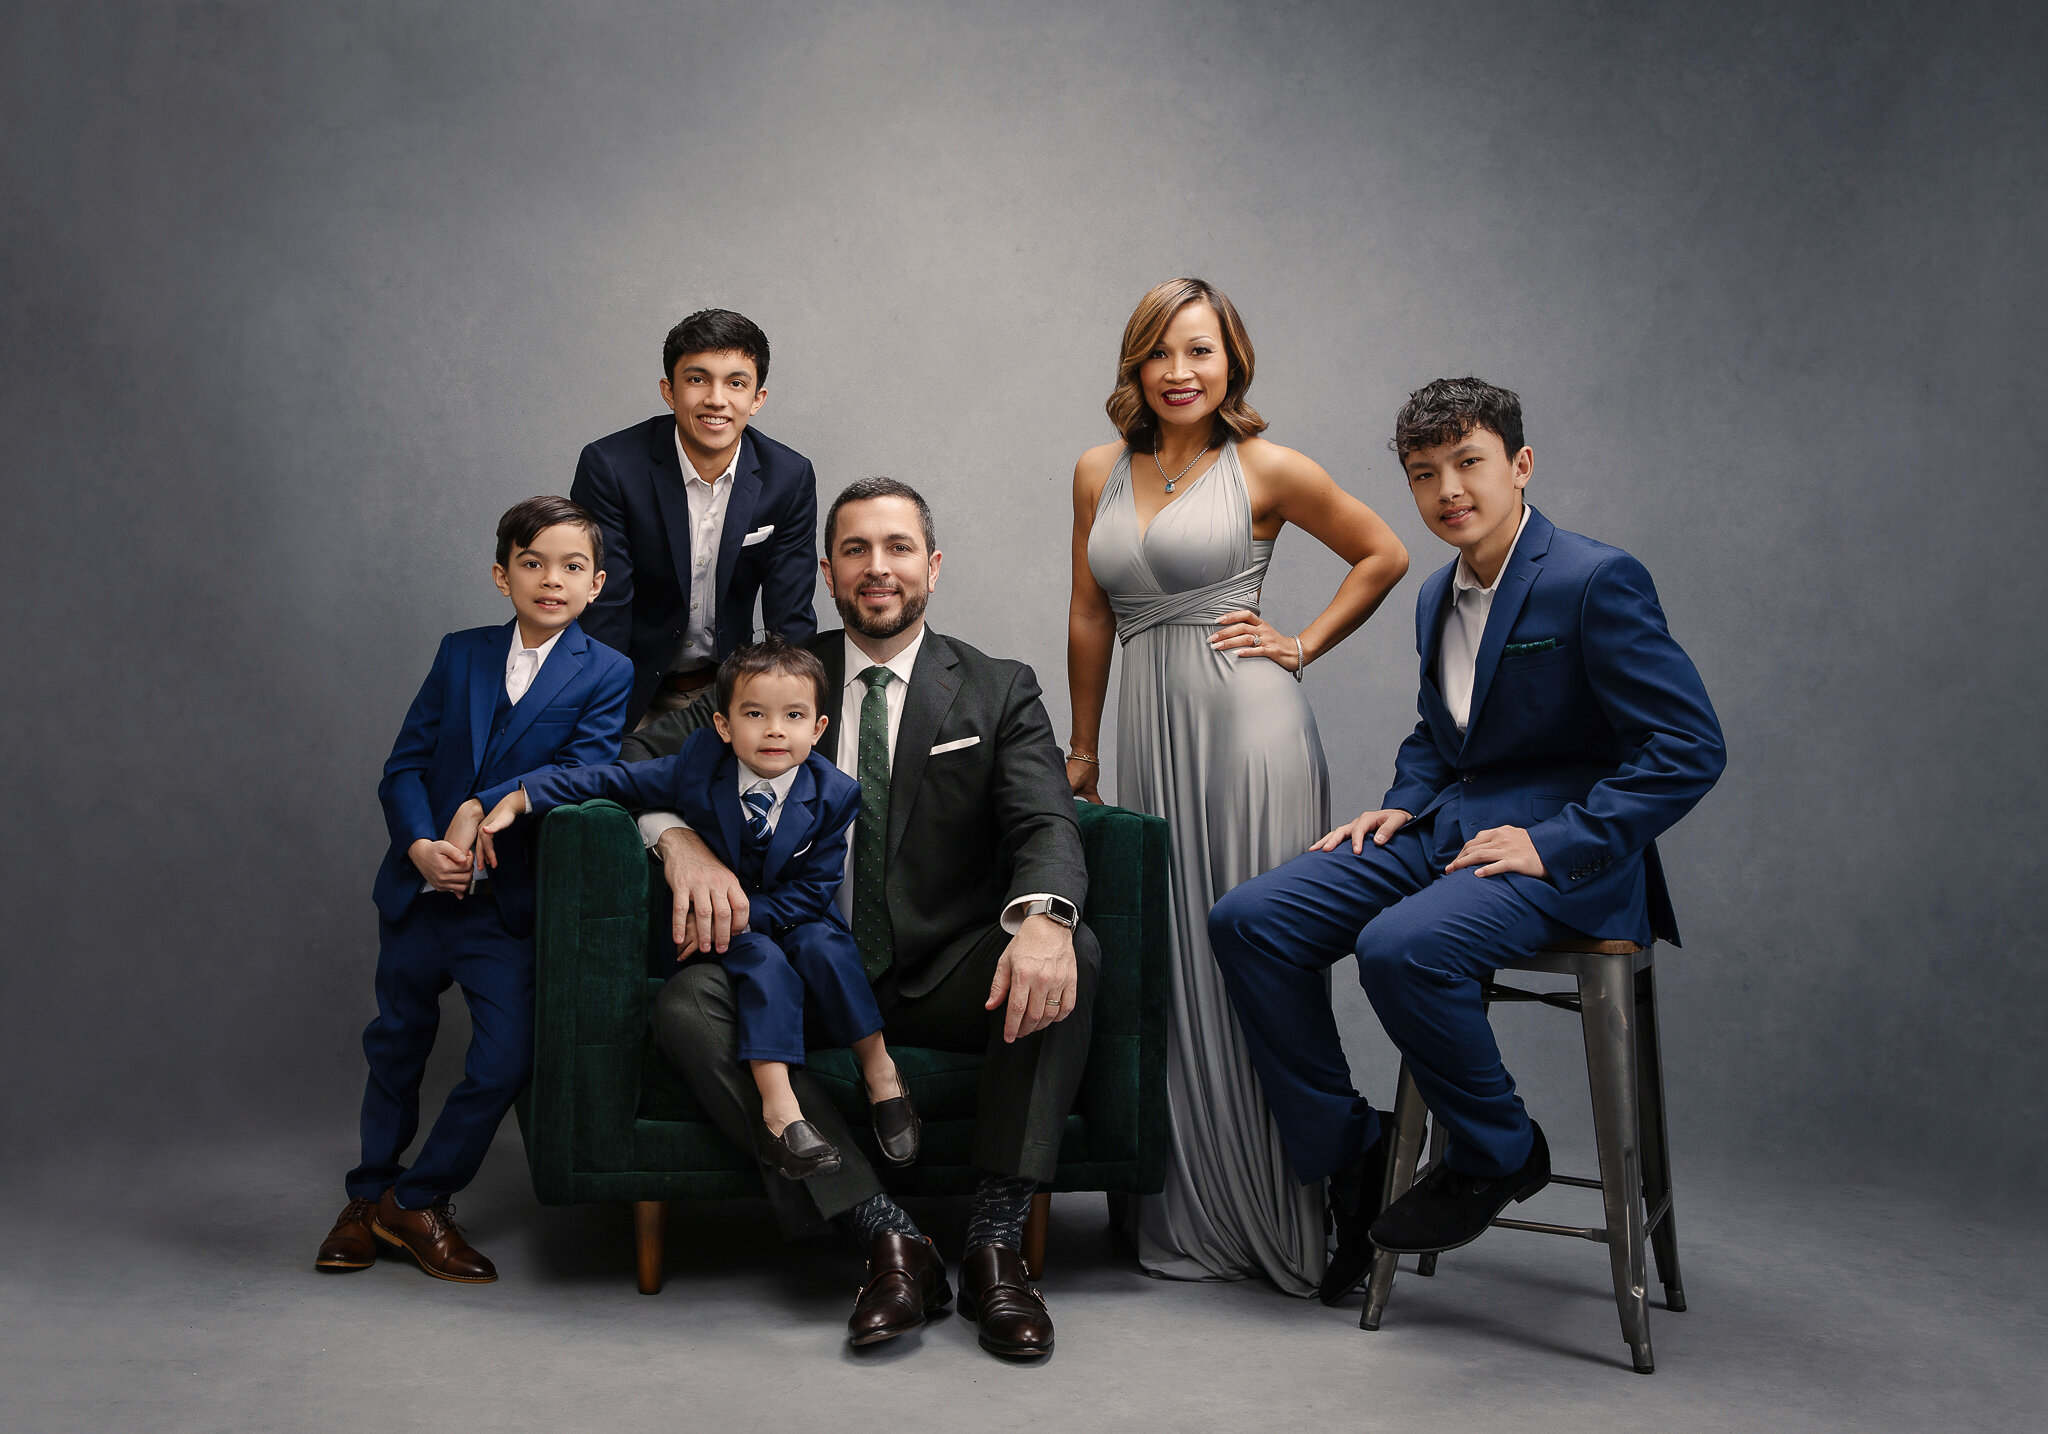 Stunning family photography by Mayumi Acosta in Sacramento, CA